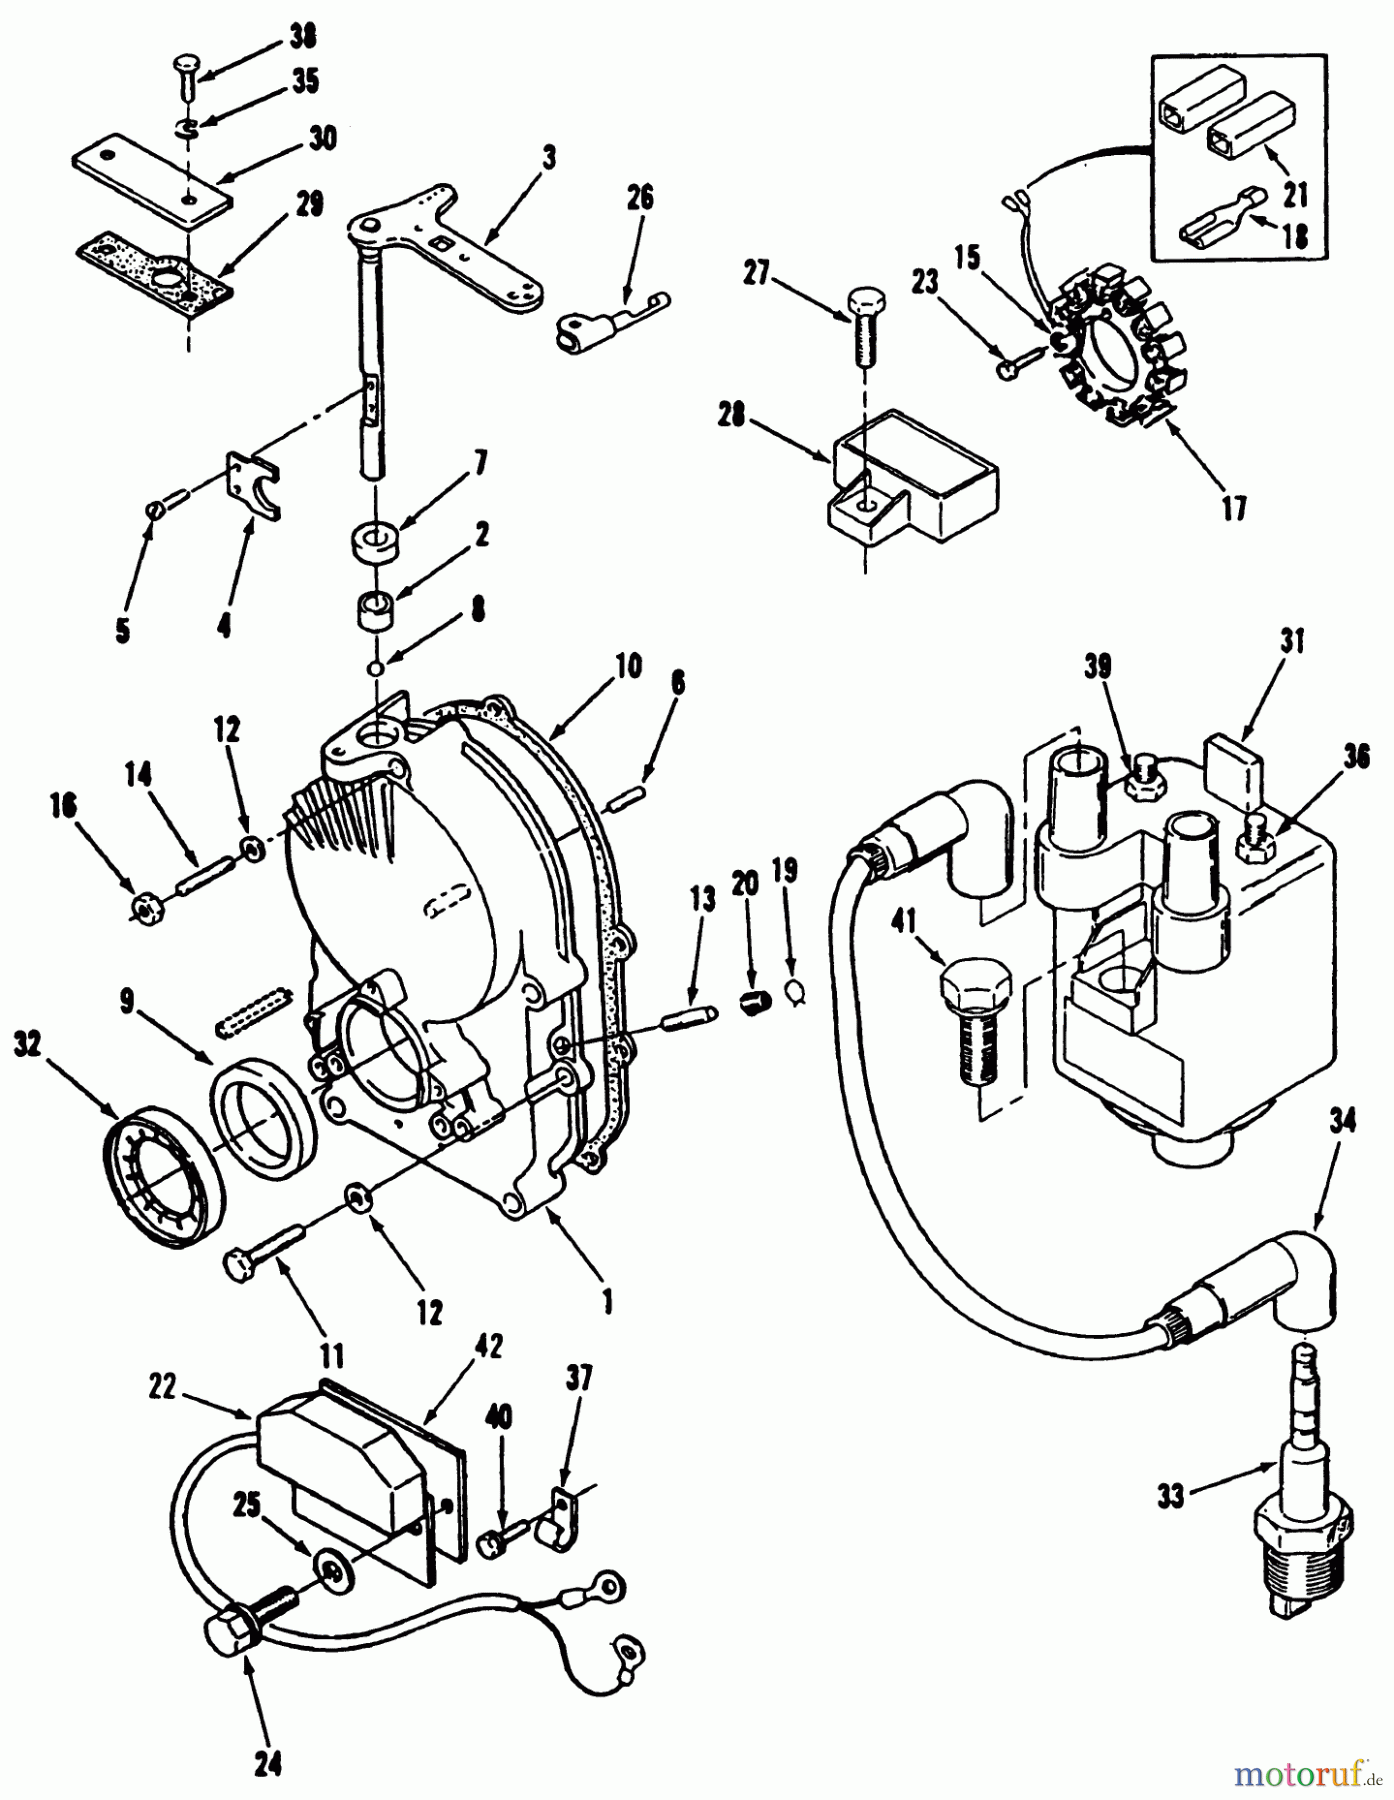  Toro Neu Mowers, Lawn & Garden Tractor Seite 1 51-12KE02 (312-H) - Toro 312-H Garden Tractor, 1992 (2000001-2999999) GEARCASE AND IGNITION CONTROLS POWER PLUS